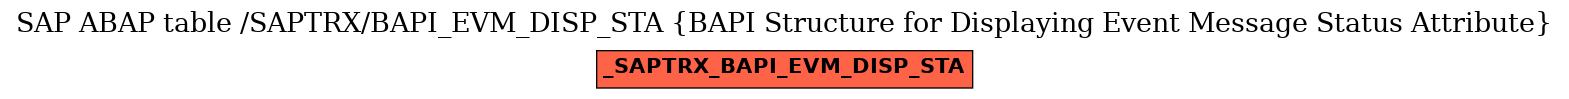 E-R Diagram for table /SAPTRX/BAPI_EVM_DISP_STA (BAPI Structure for Displaying Event Message Status Attribute)